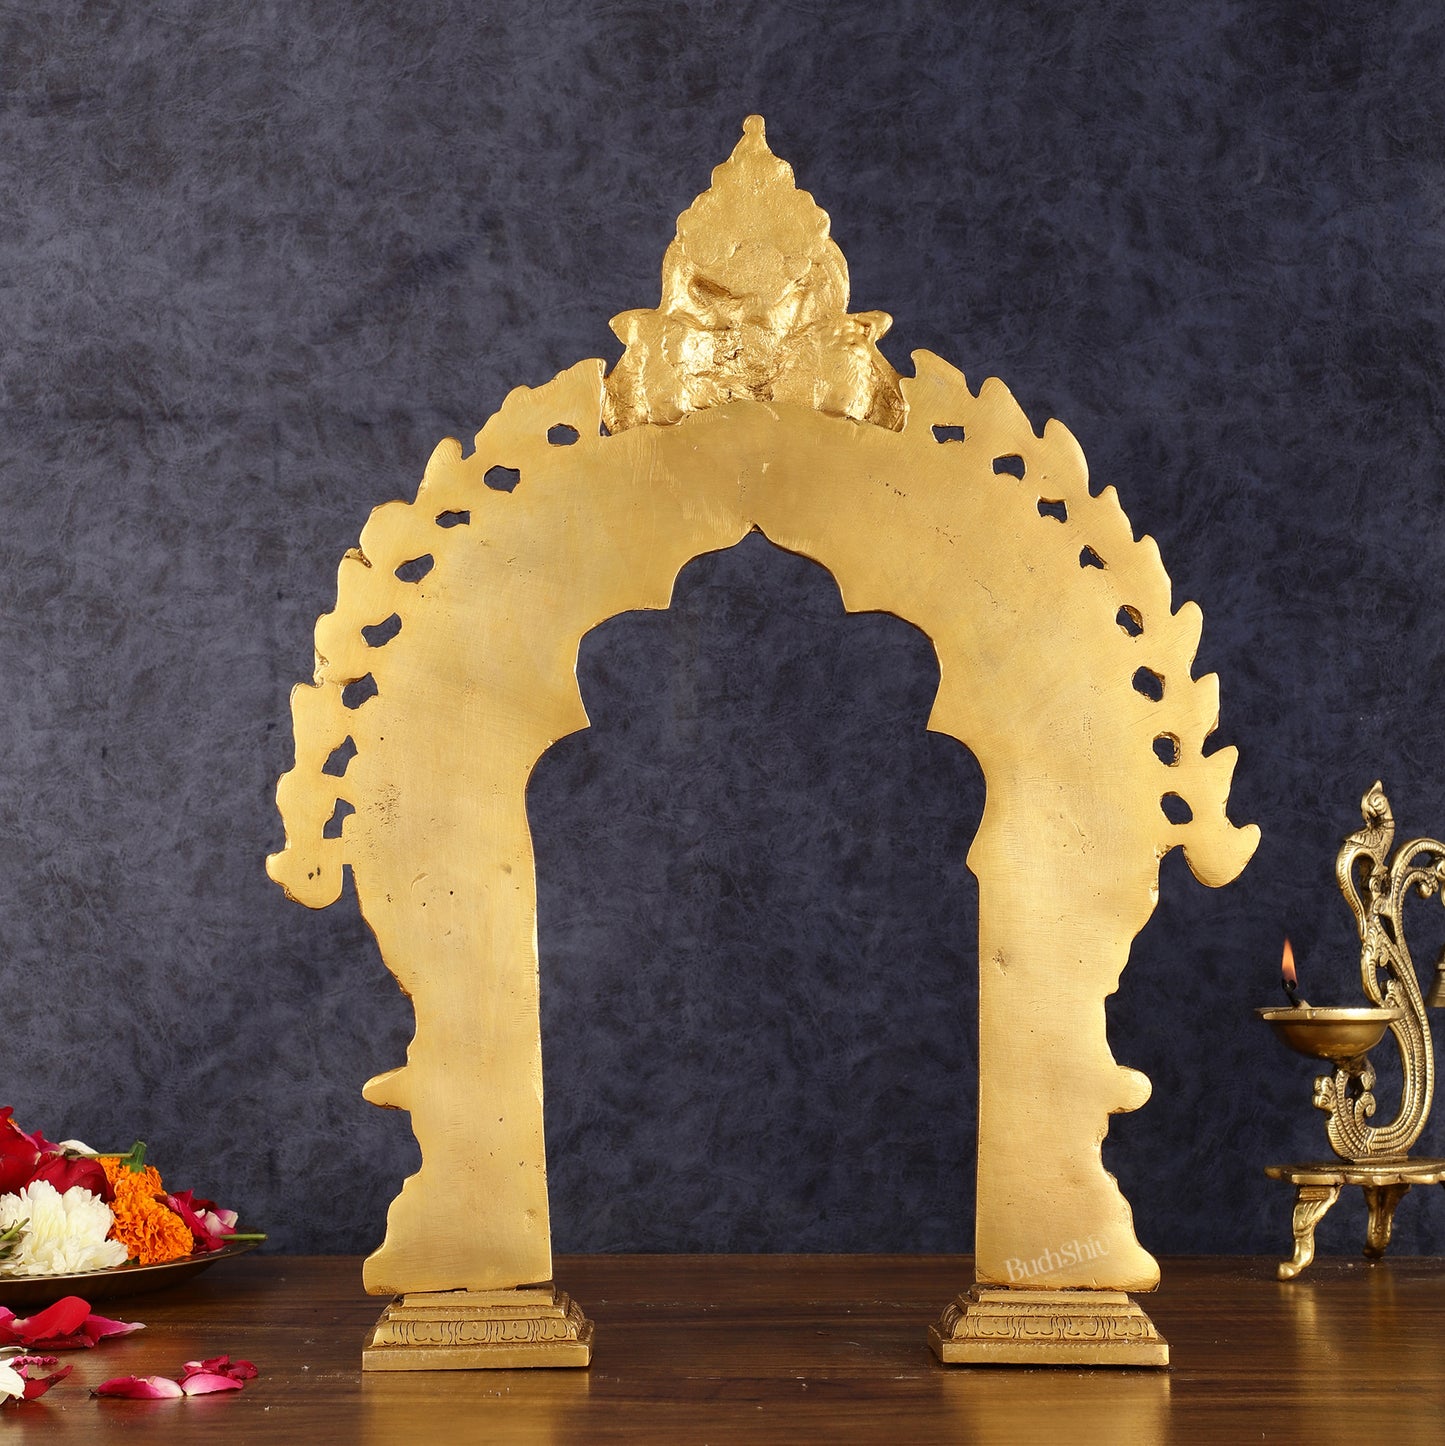 Exquisite Brass Standing Prabhavali Arch Frame 17 inch